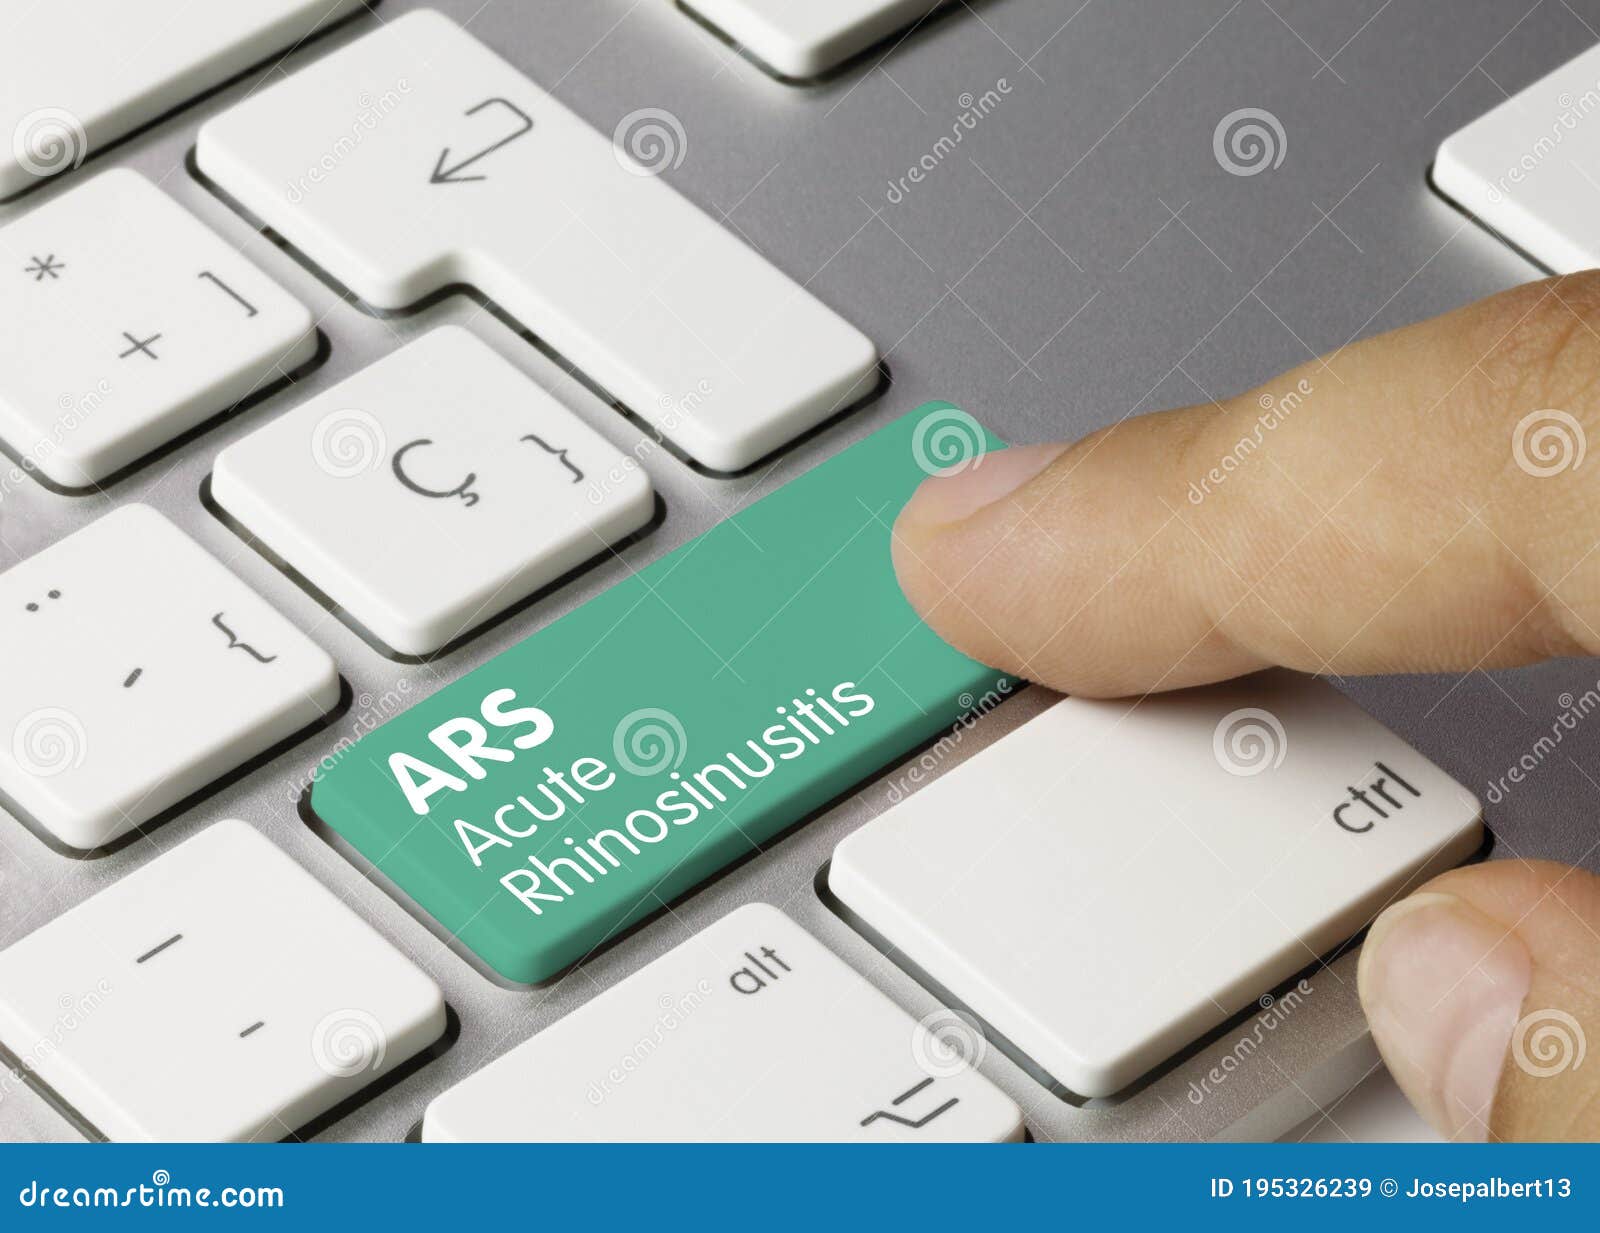 ars acute rhinosinusitis - inscription on green keyboard key